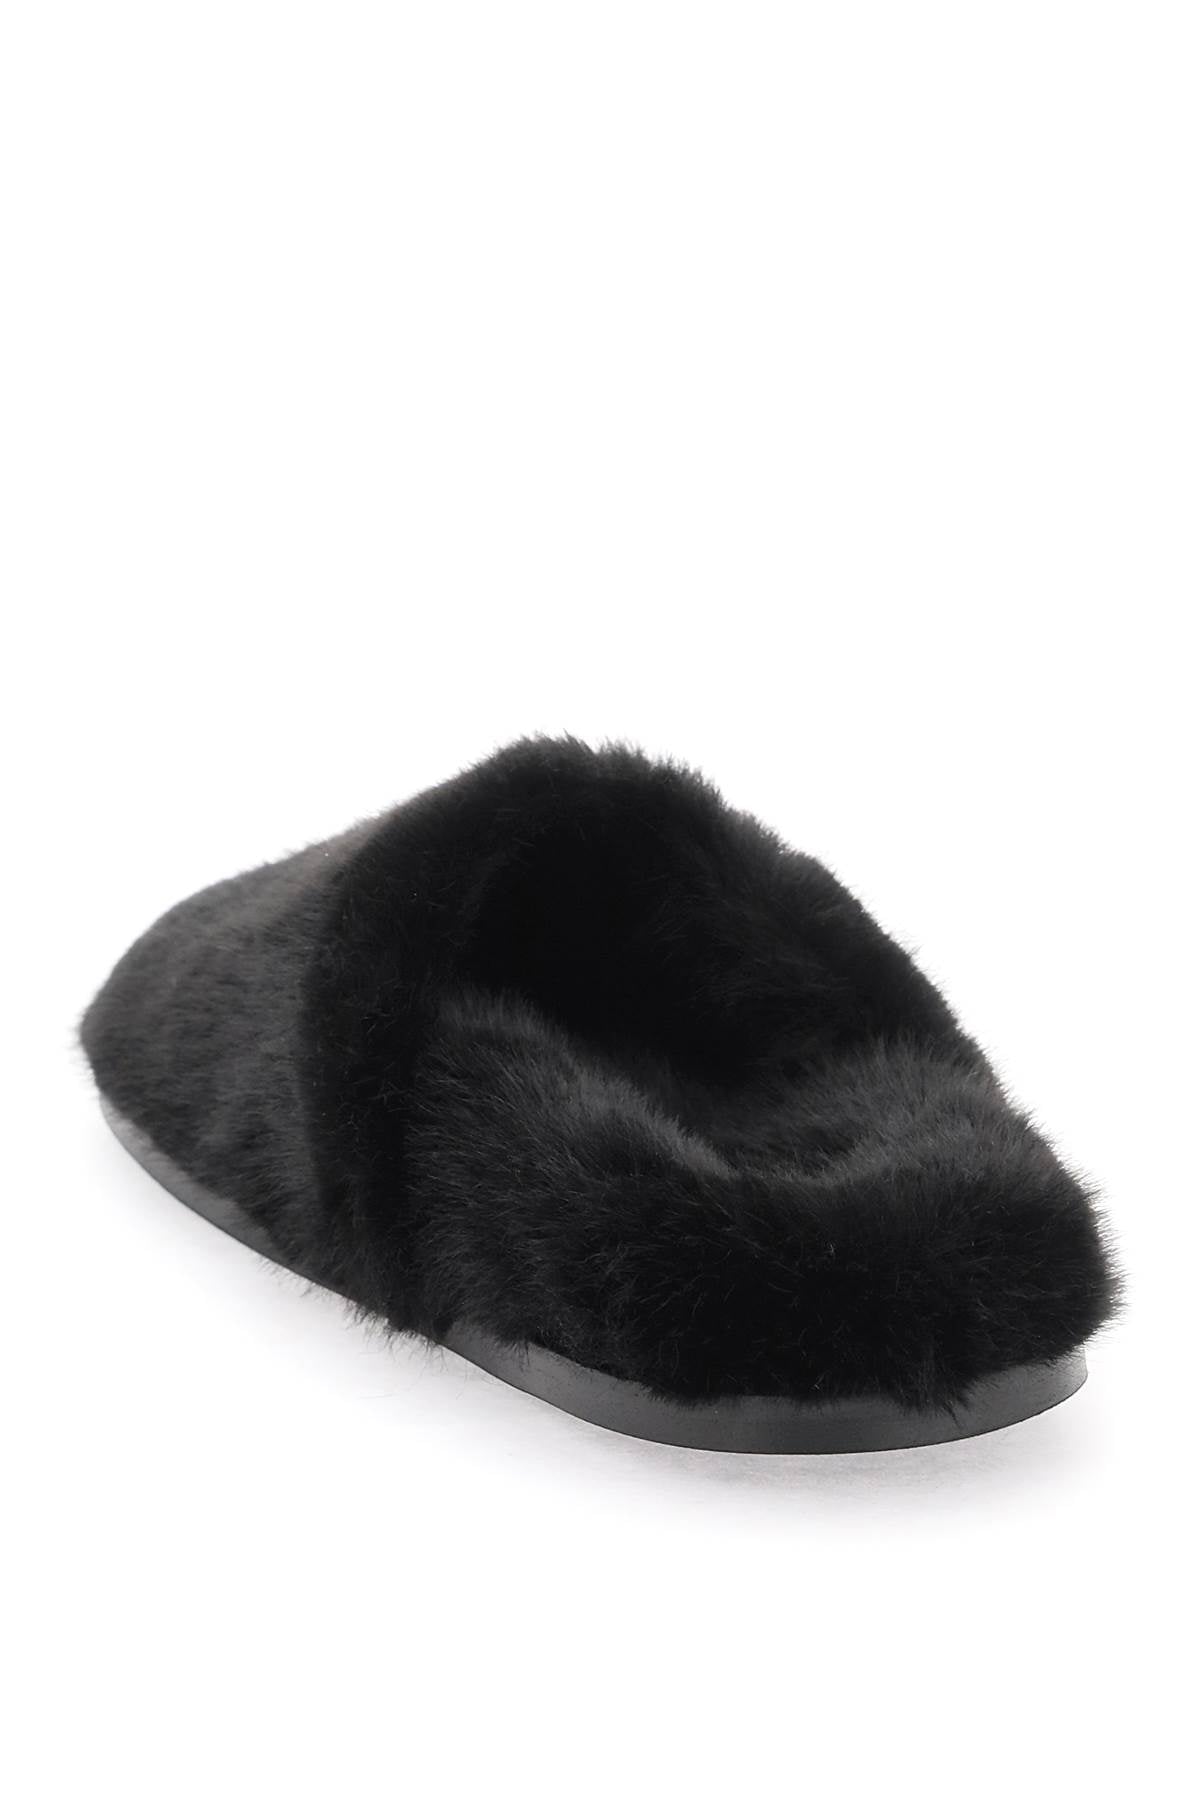 SIMONE ROCHA Faux Fur Sabots for Women in Black - FW23 Collection